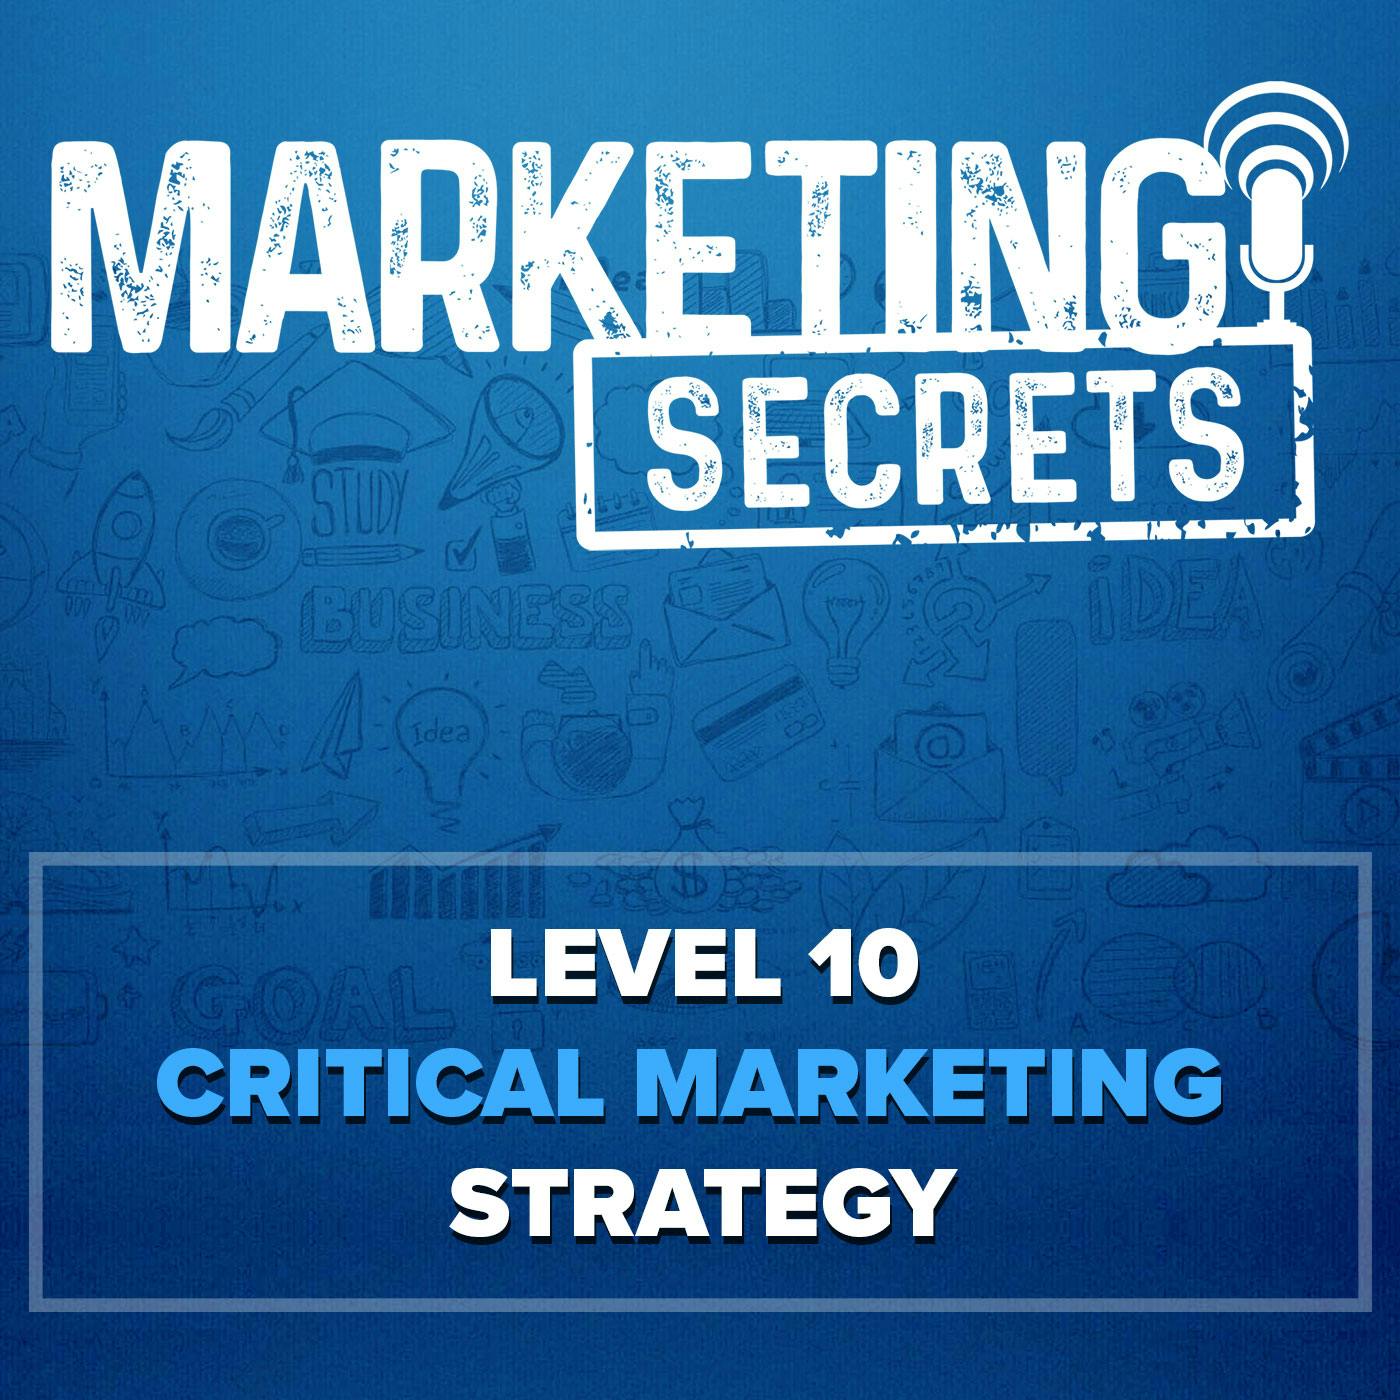 Level 10 Critical Marketing Strategy